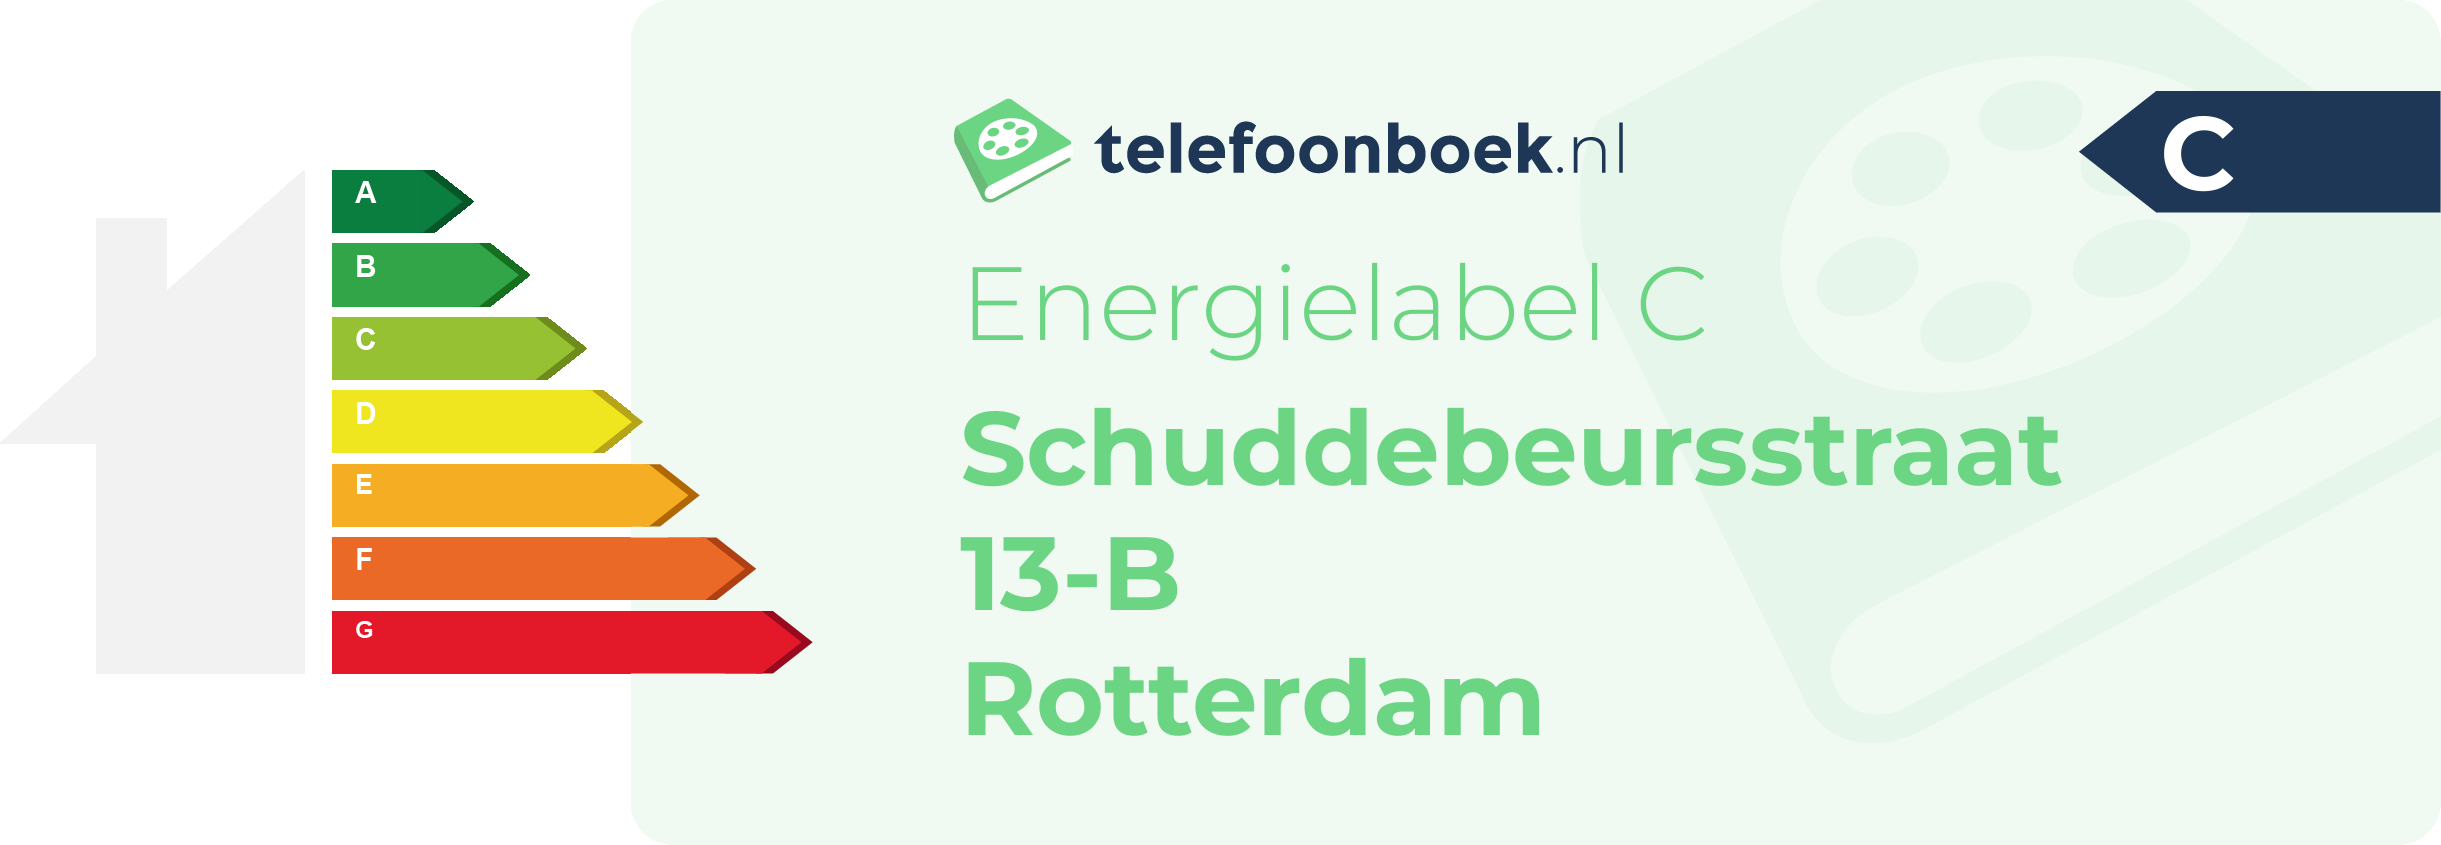 Energielabel Schuddebeursstraat 13-B Rotterdam